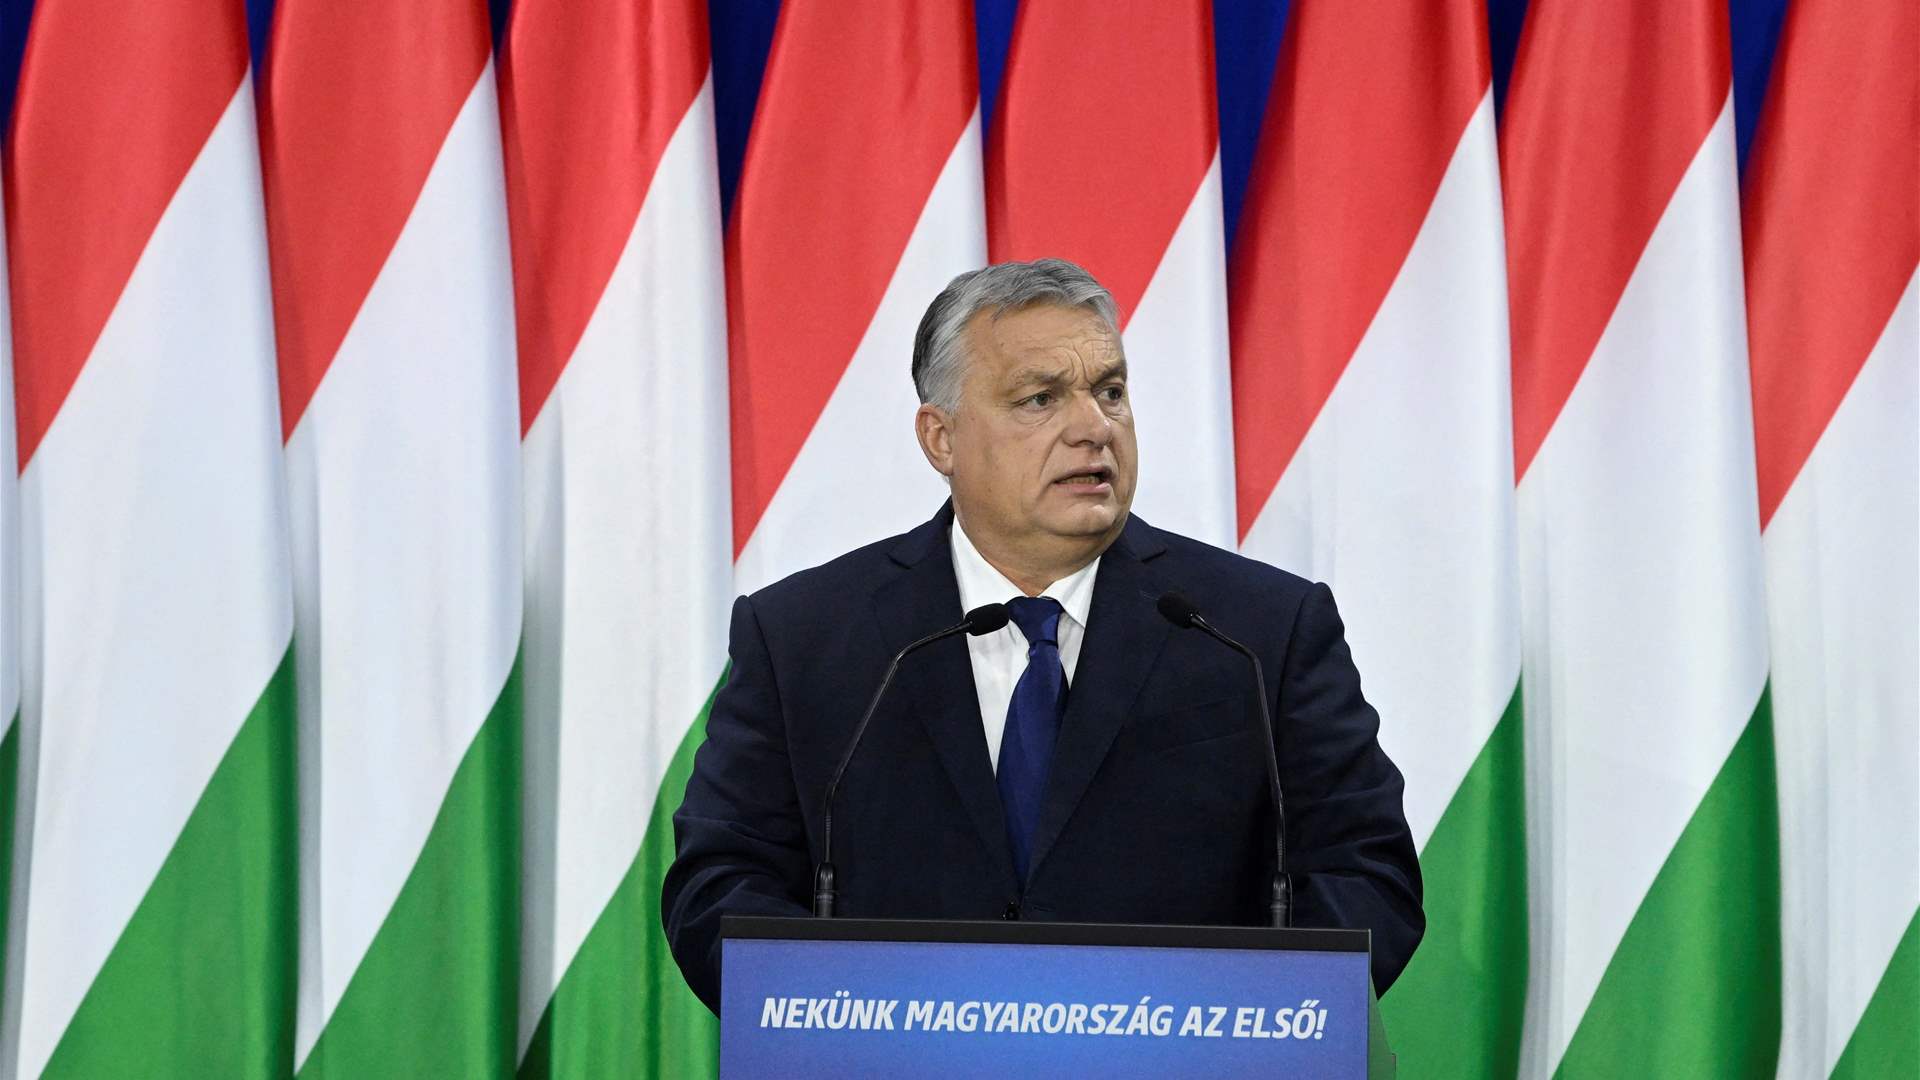 Hungary to decide Sweden&#39;s NATO membership bid on Feb. 26